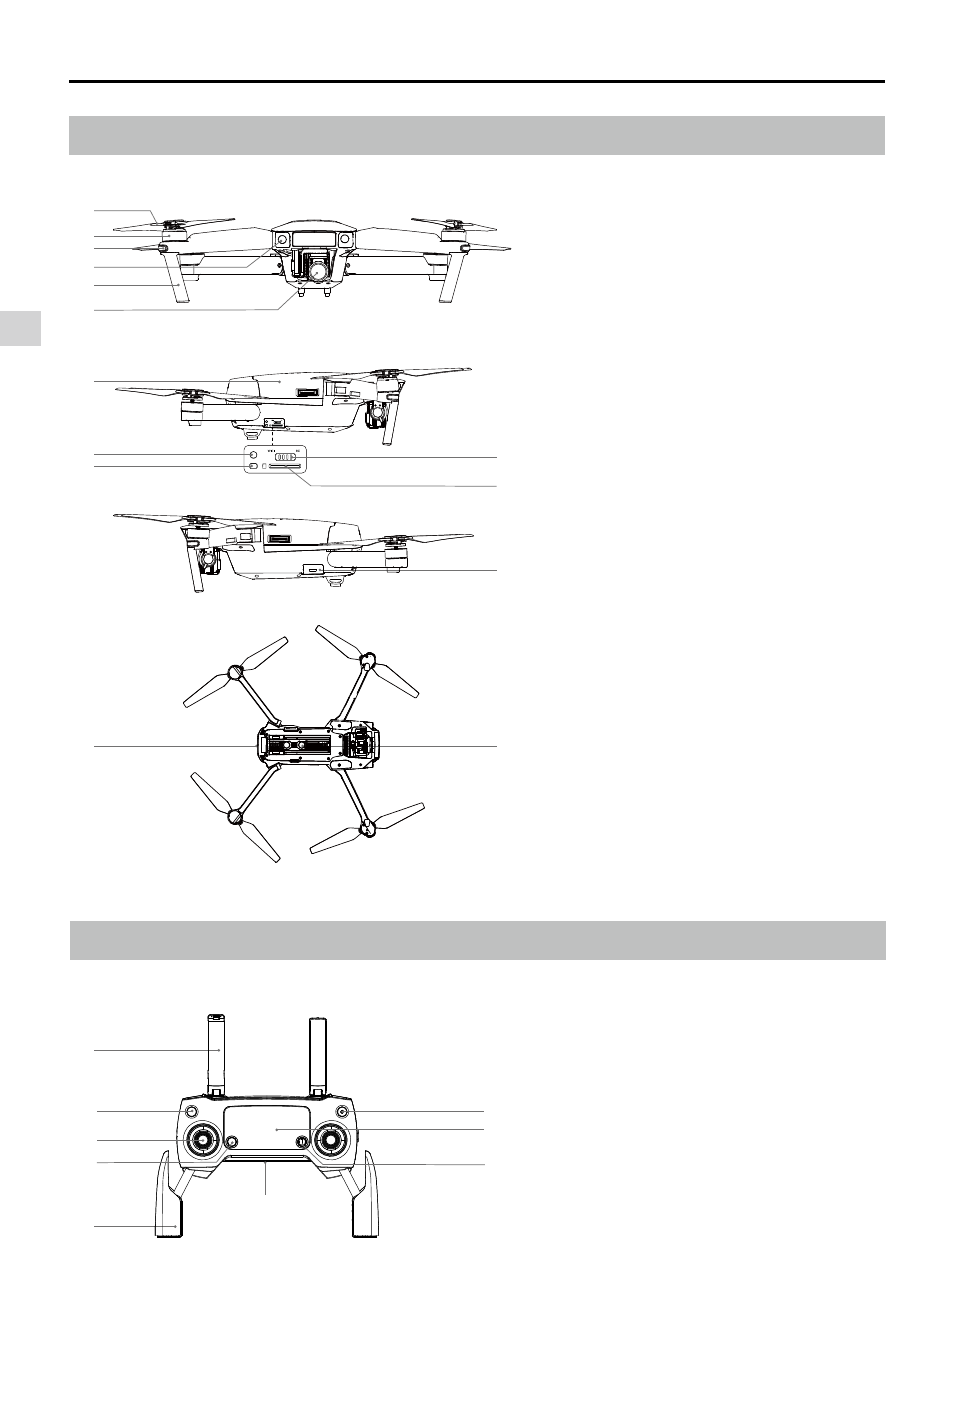 Aircraft diagram, Remote controller diagram, Aircraft diagram remote